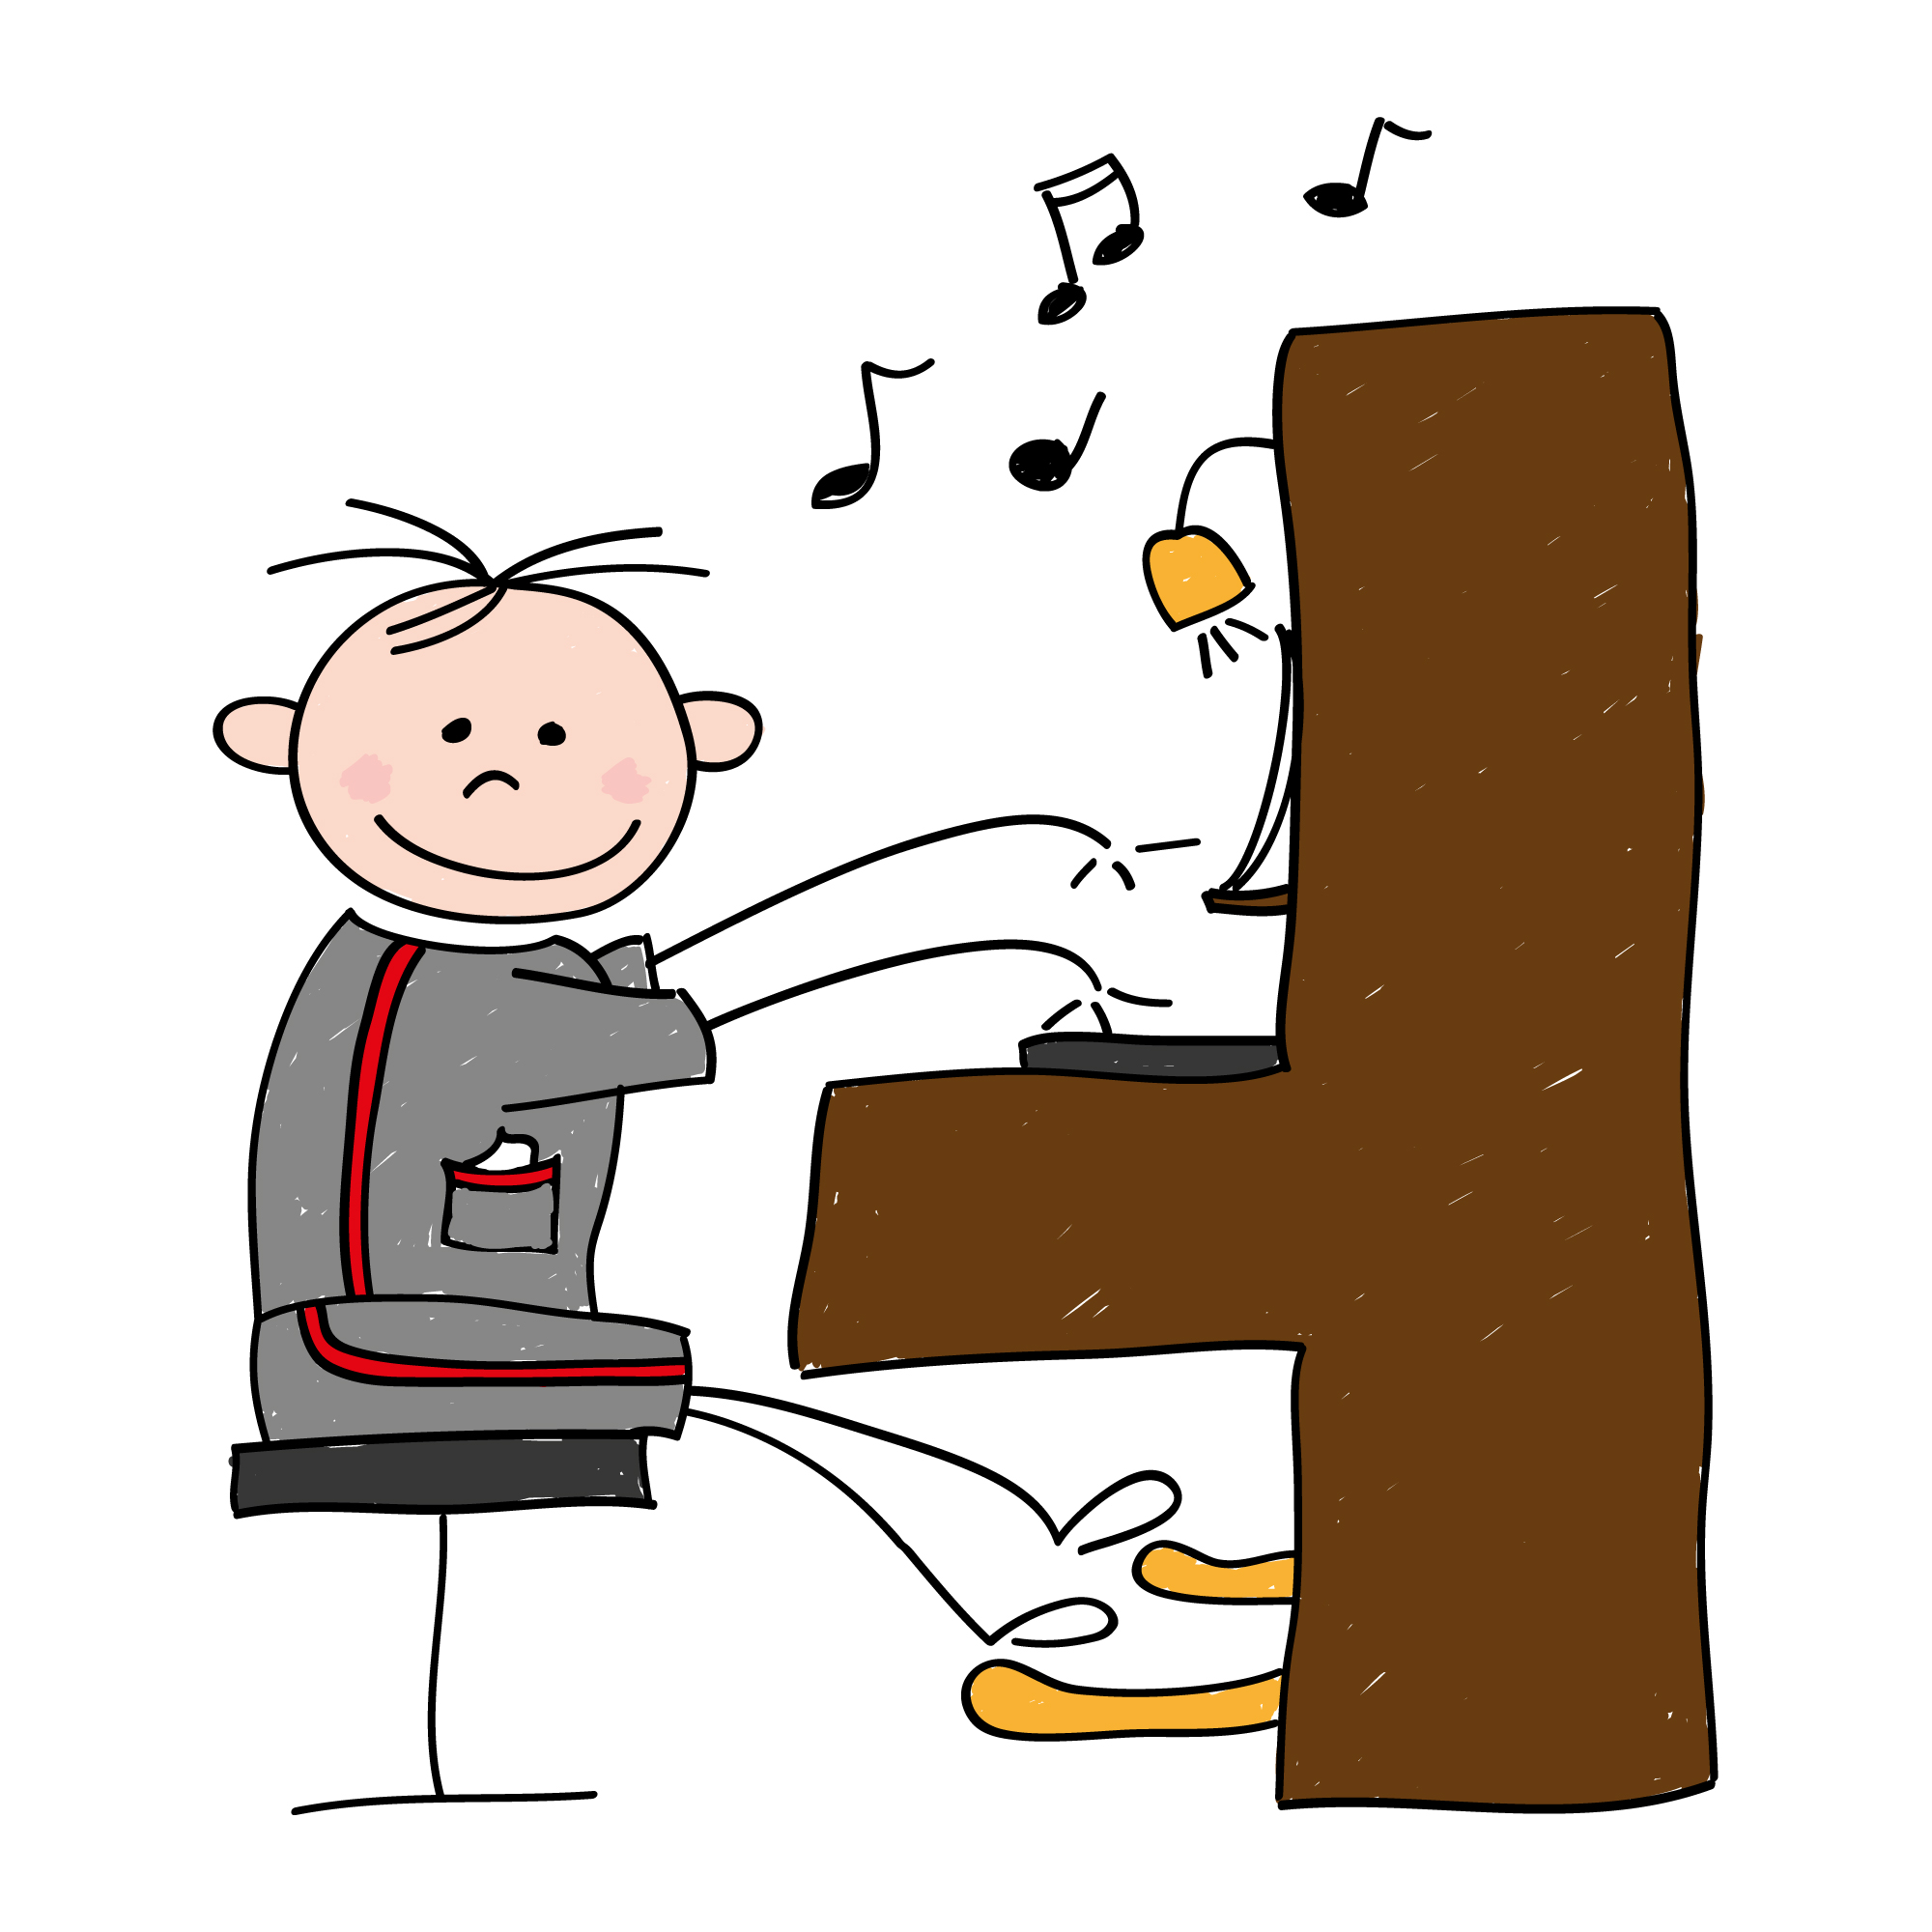 Free Piano Cartoon, Download Free Piano Cartoon png images, Free